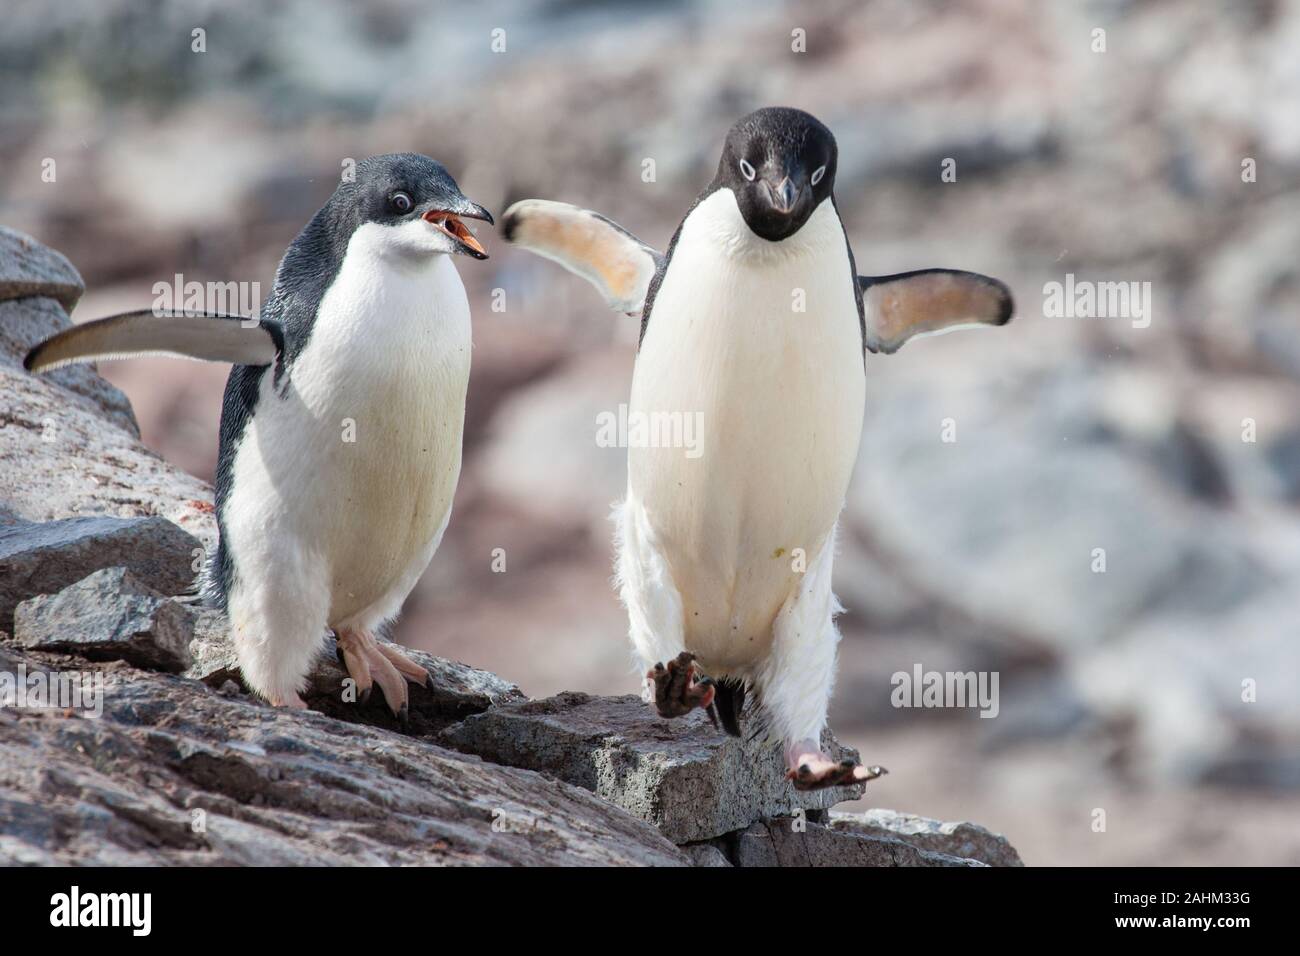 Adele Penguin in Antarctica Stock Photo